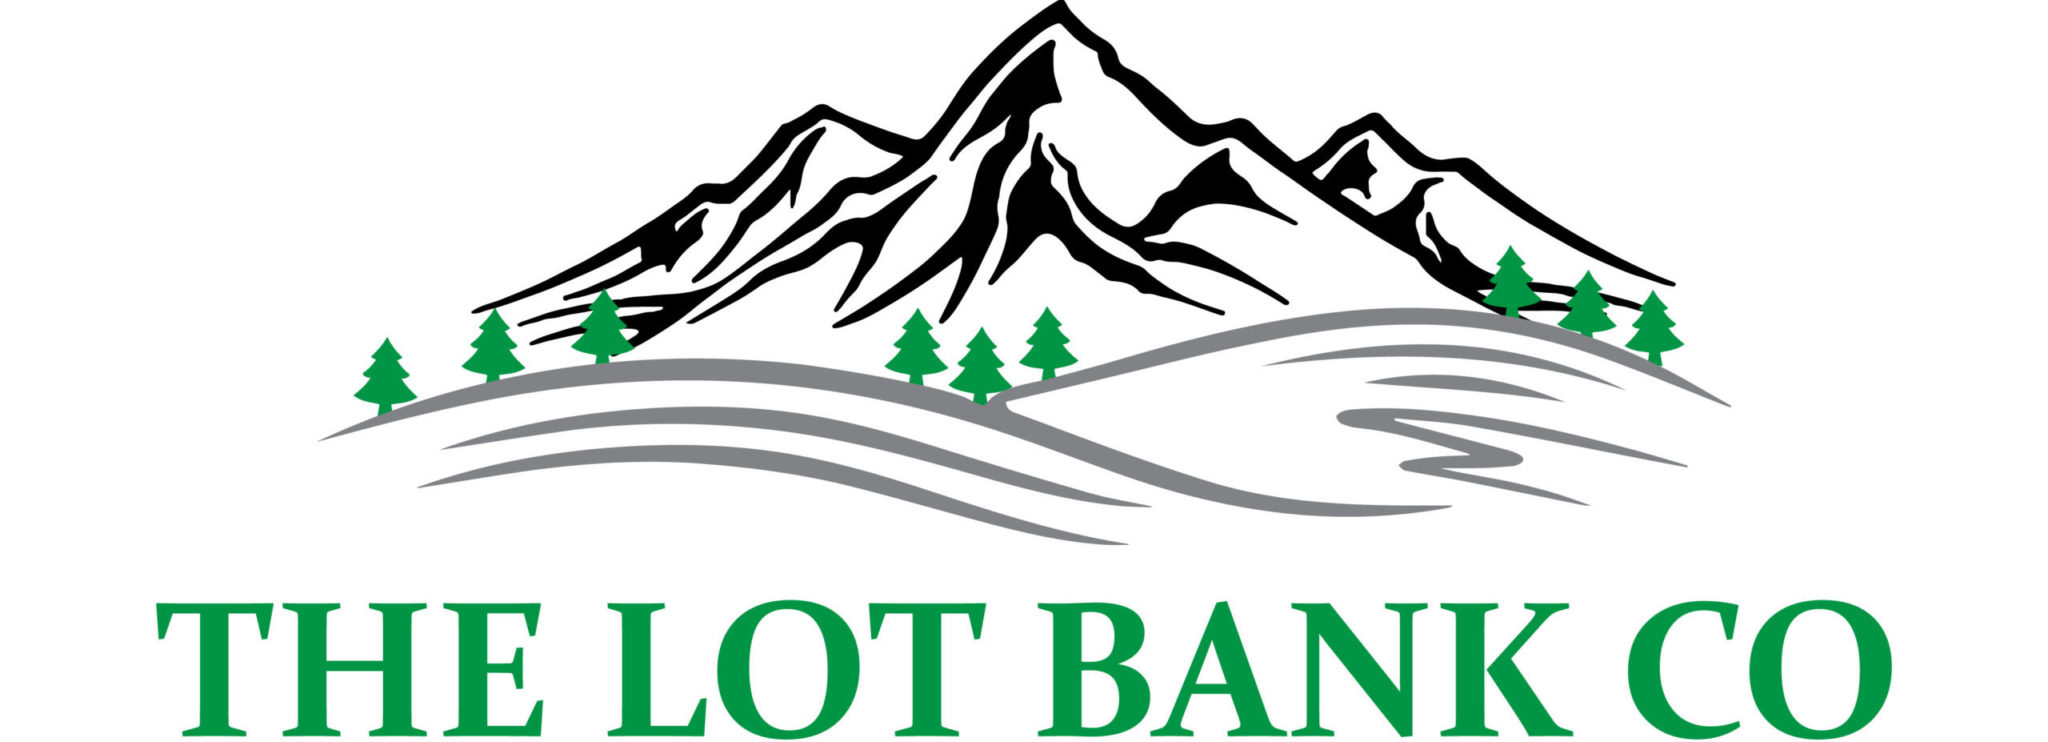 The-Lot-Bank-Co-Logo.jpg